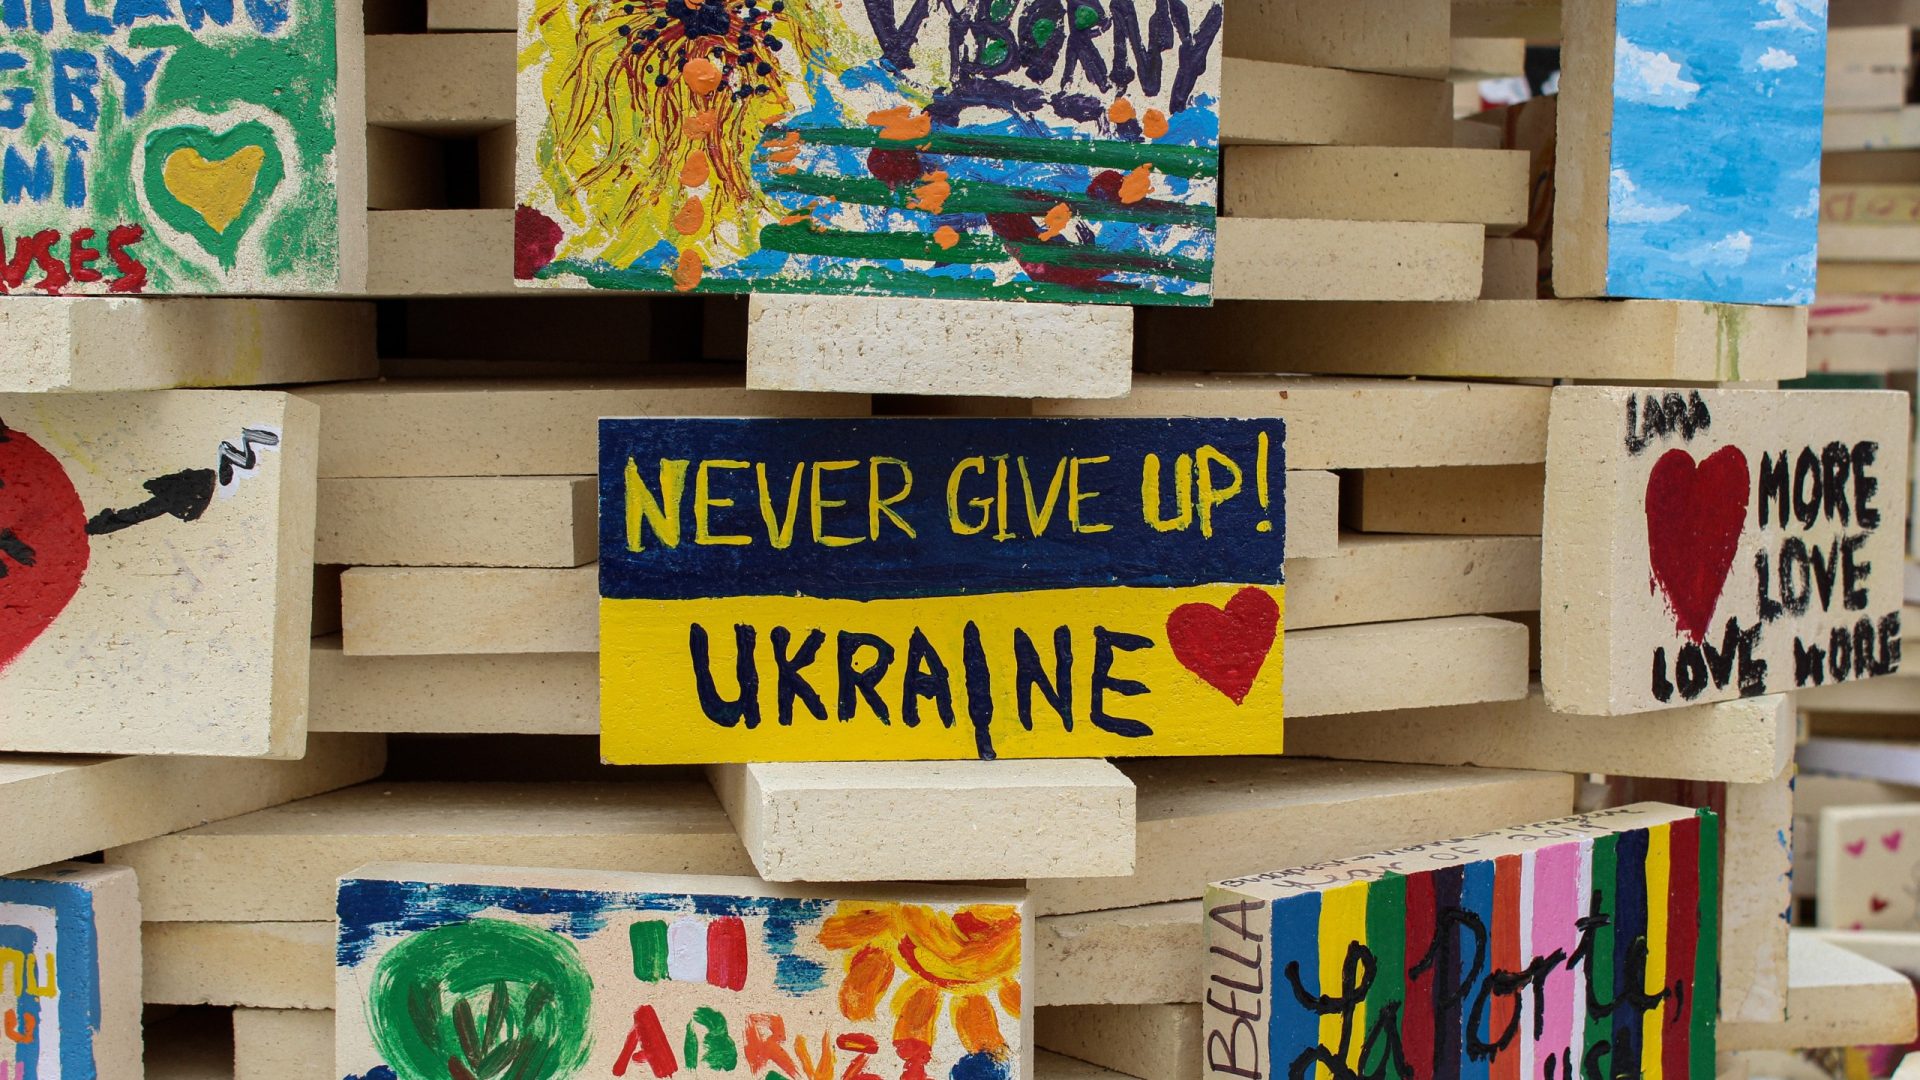 Messages in support of Ukraine.